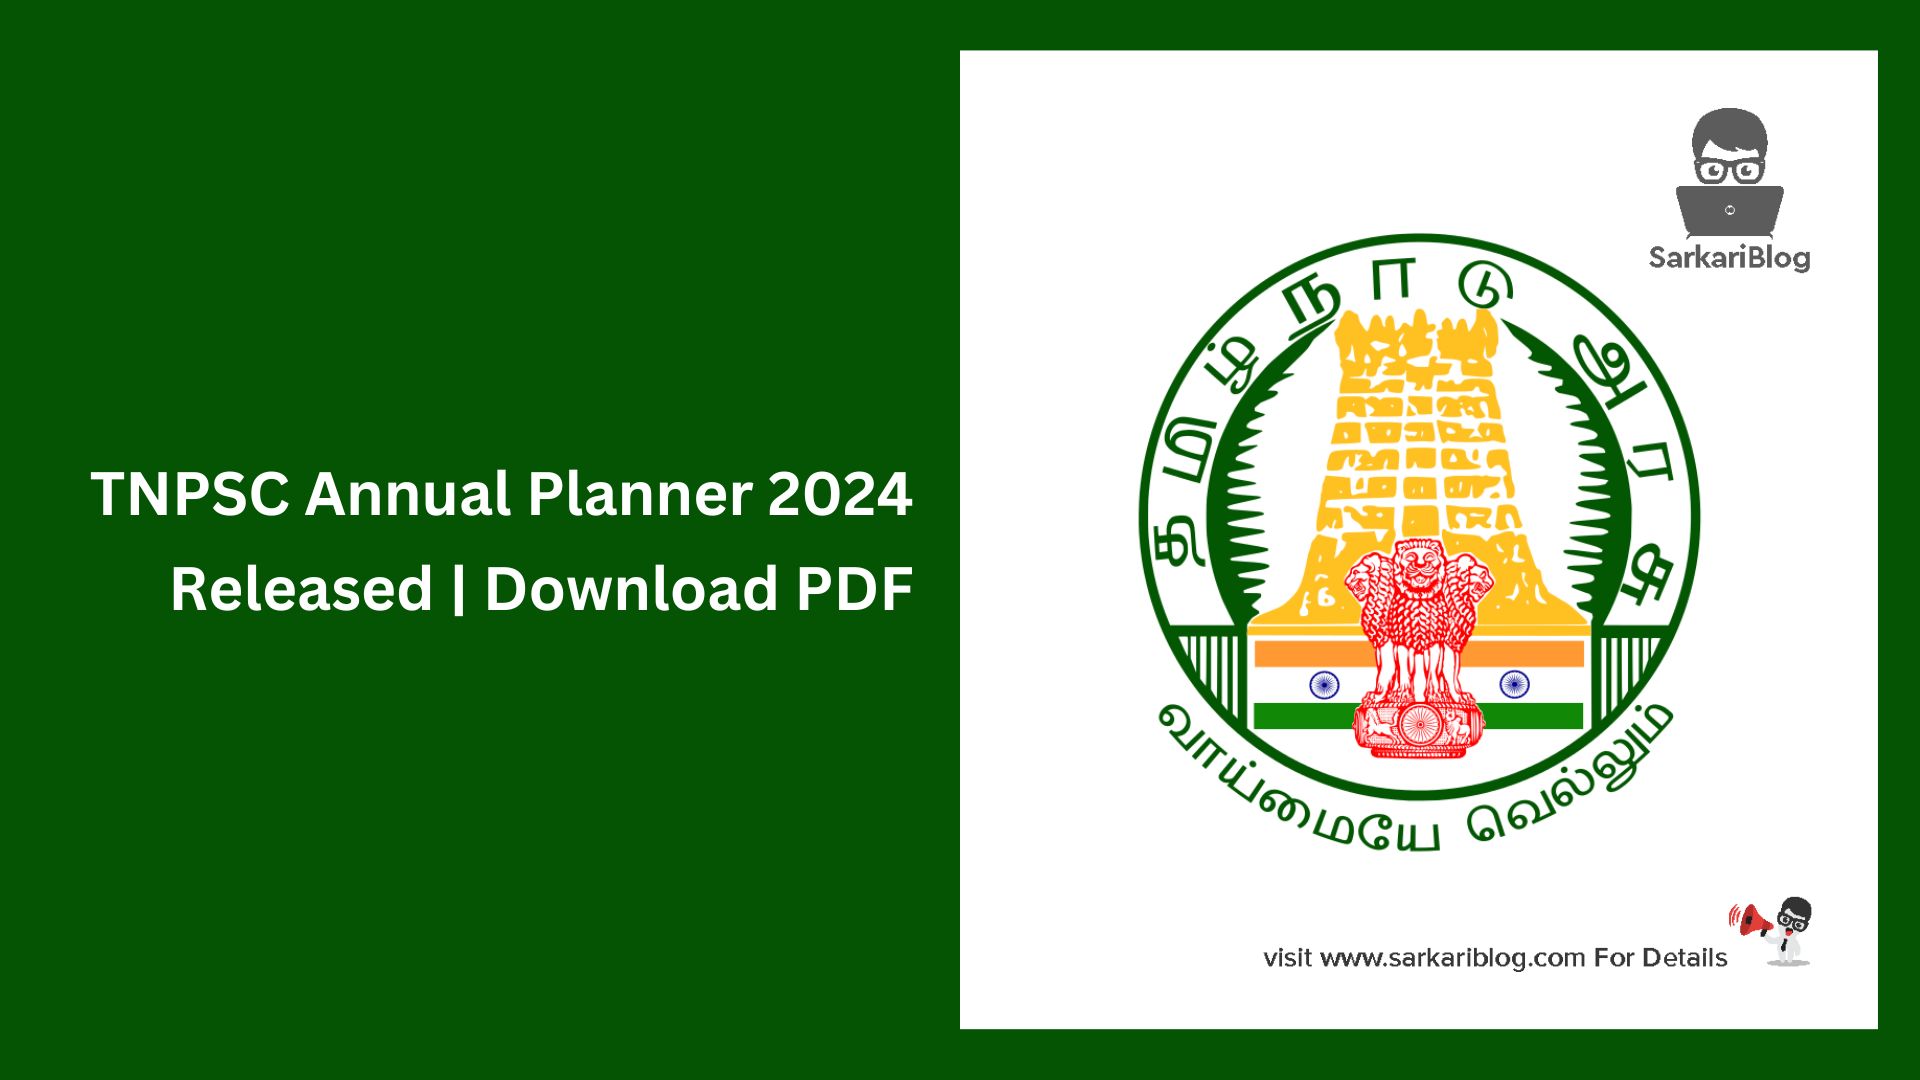 TNPSC Annual Planner 2024